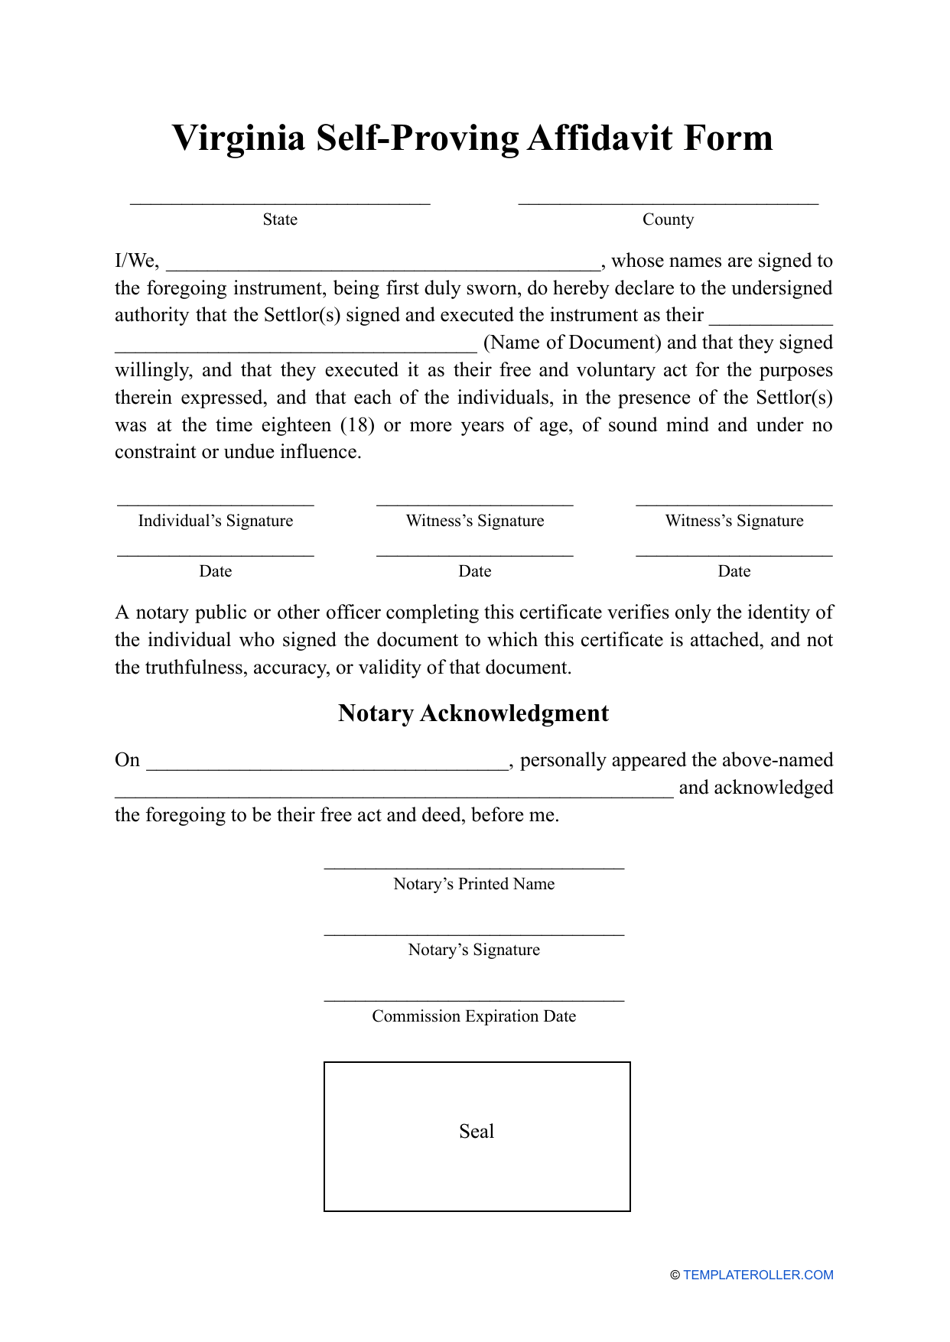 Self-proving Affidavit Form - Virginia, Page 1